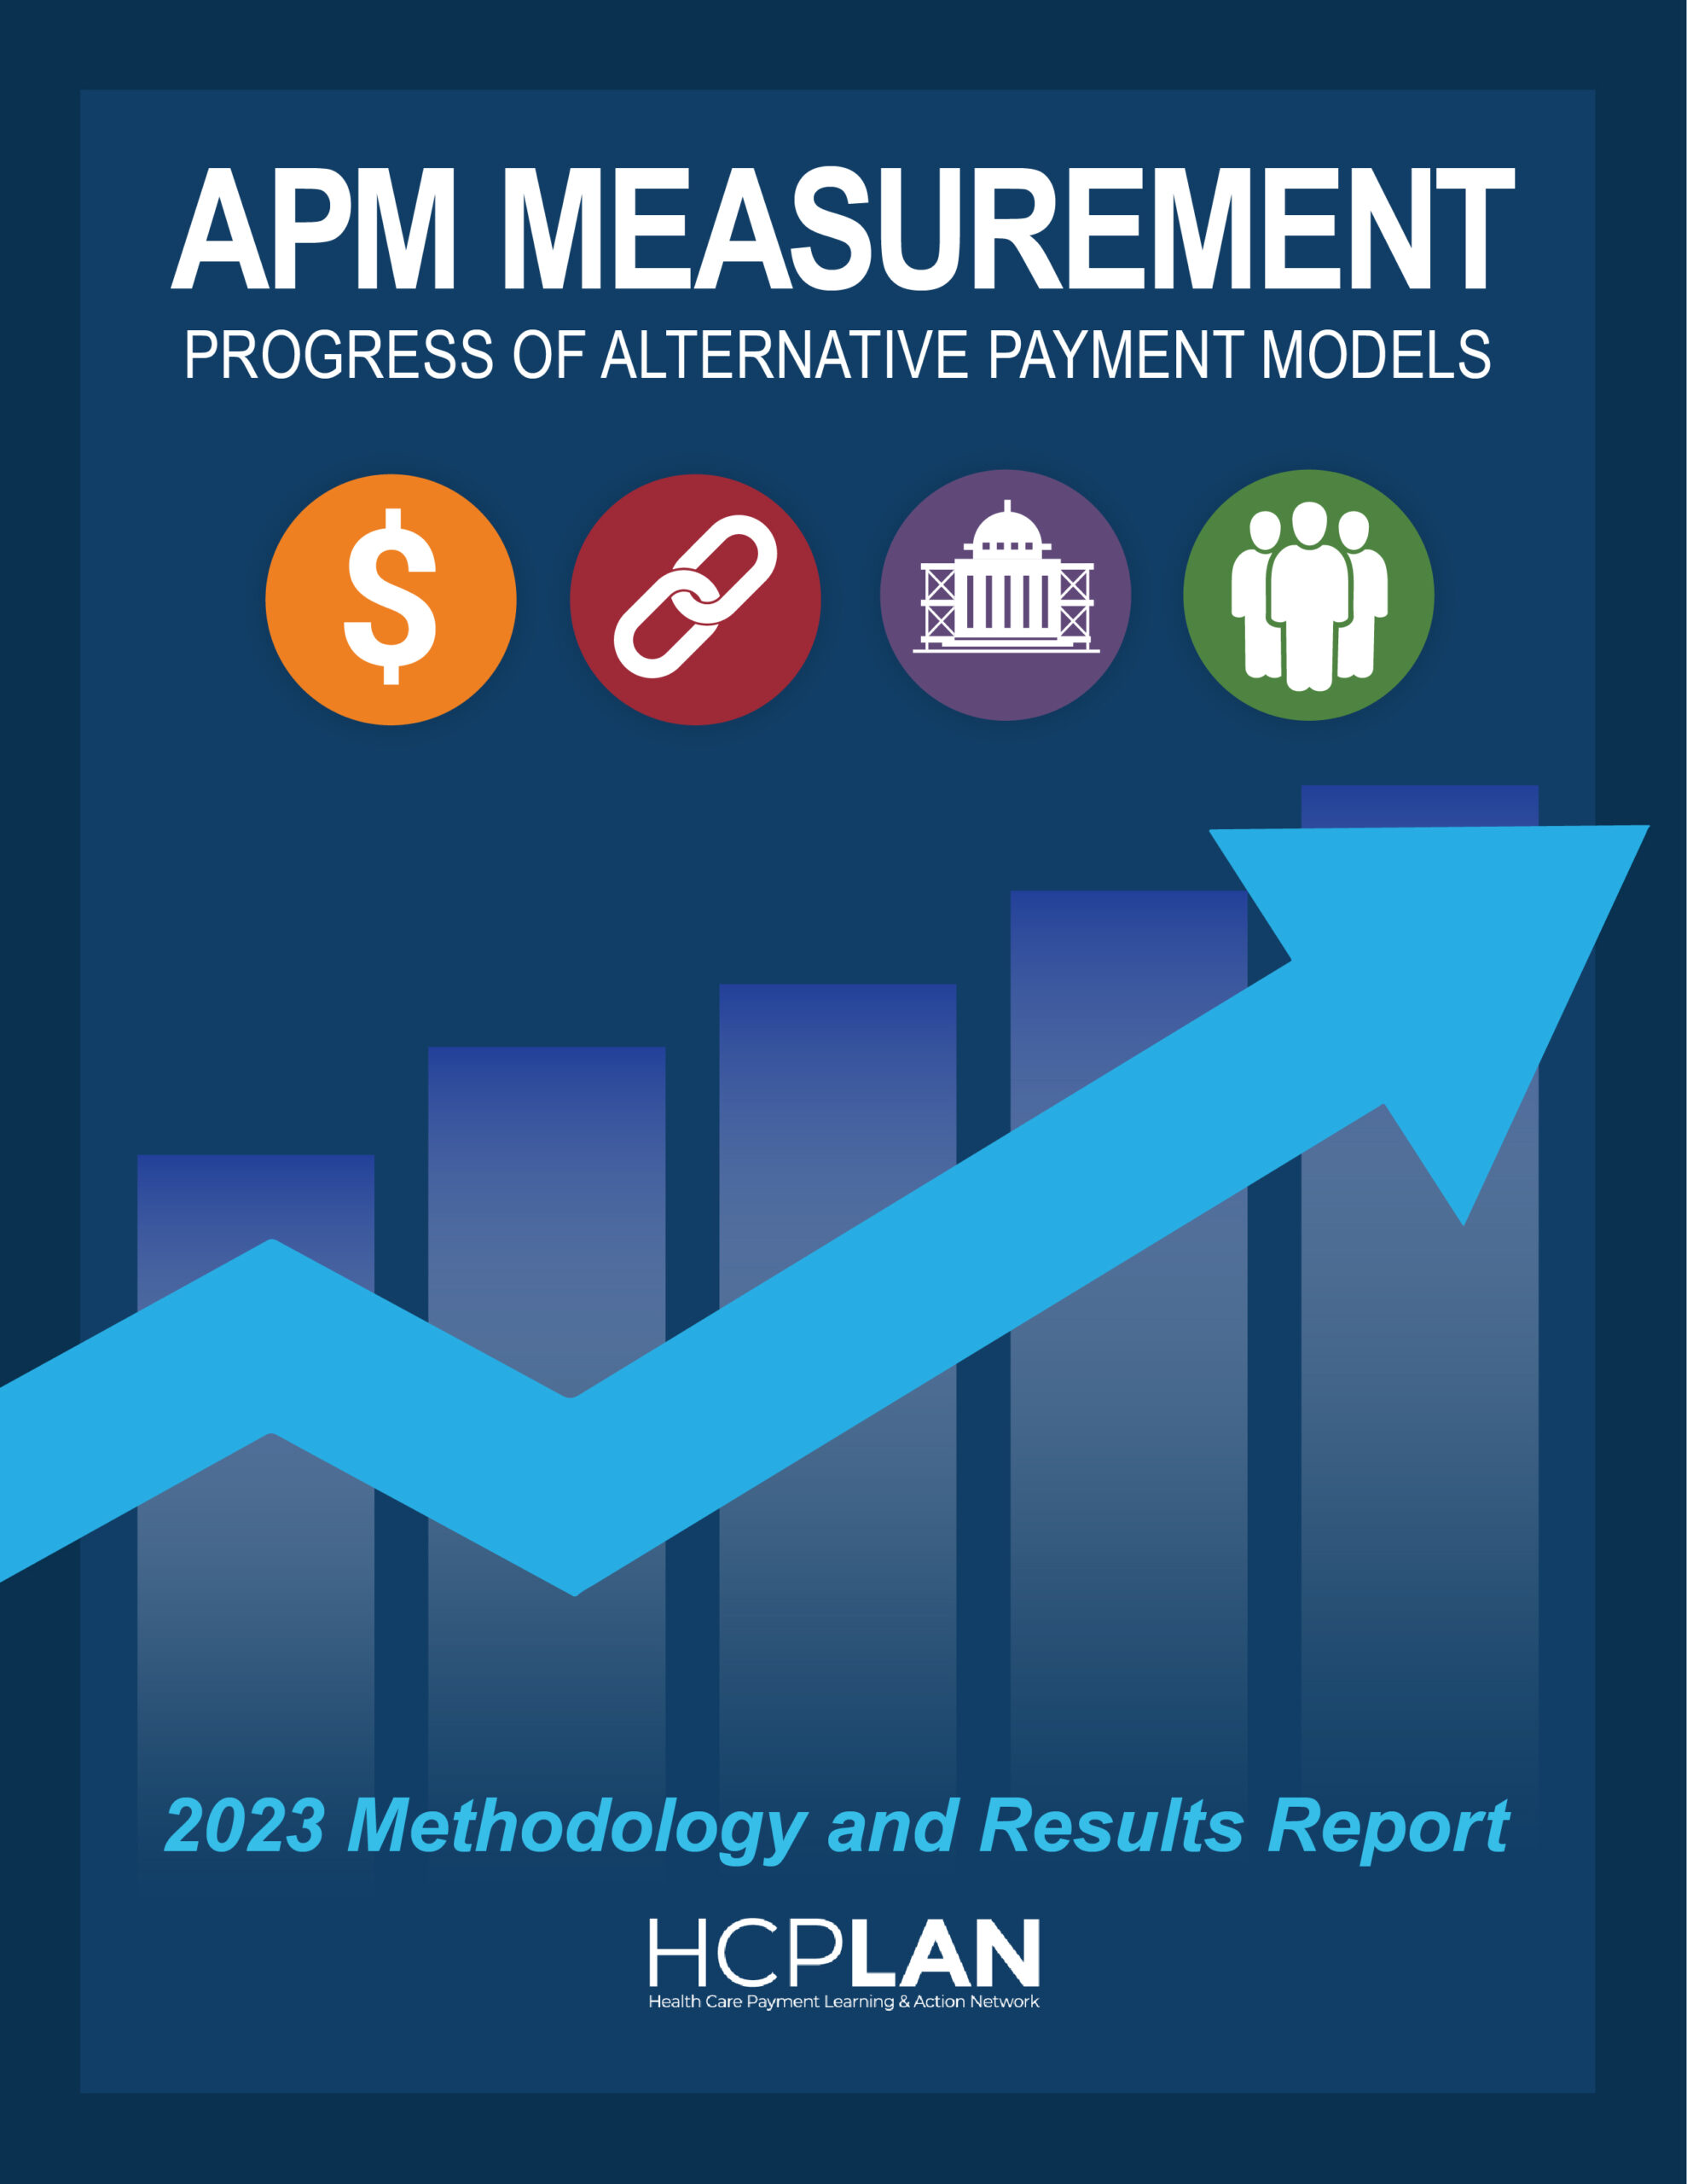 APM Measurement Survey - Health Care Payment Learning & Action Network